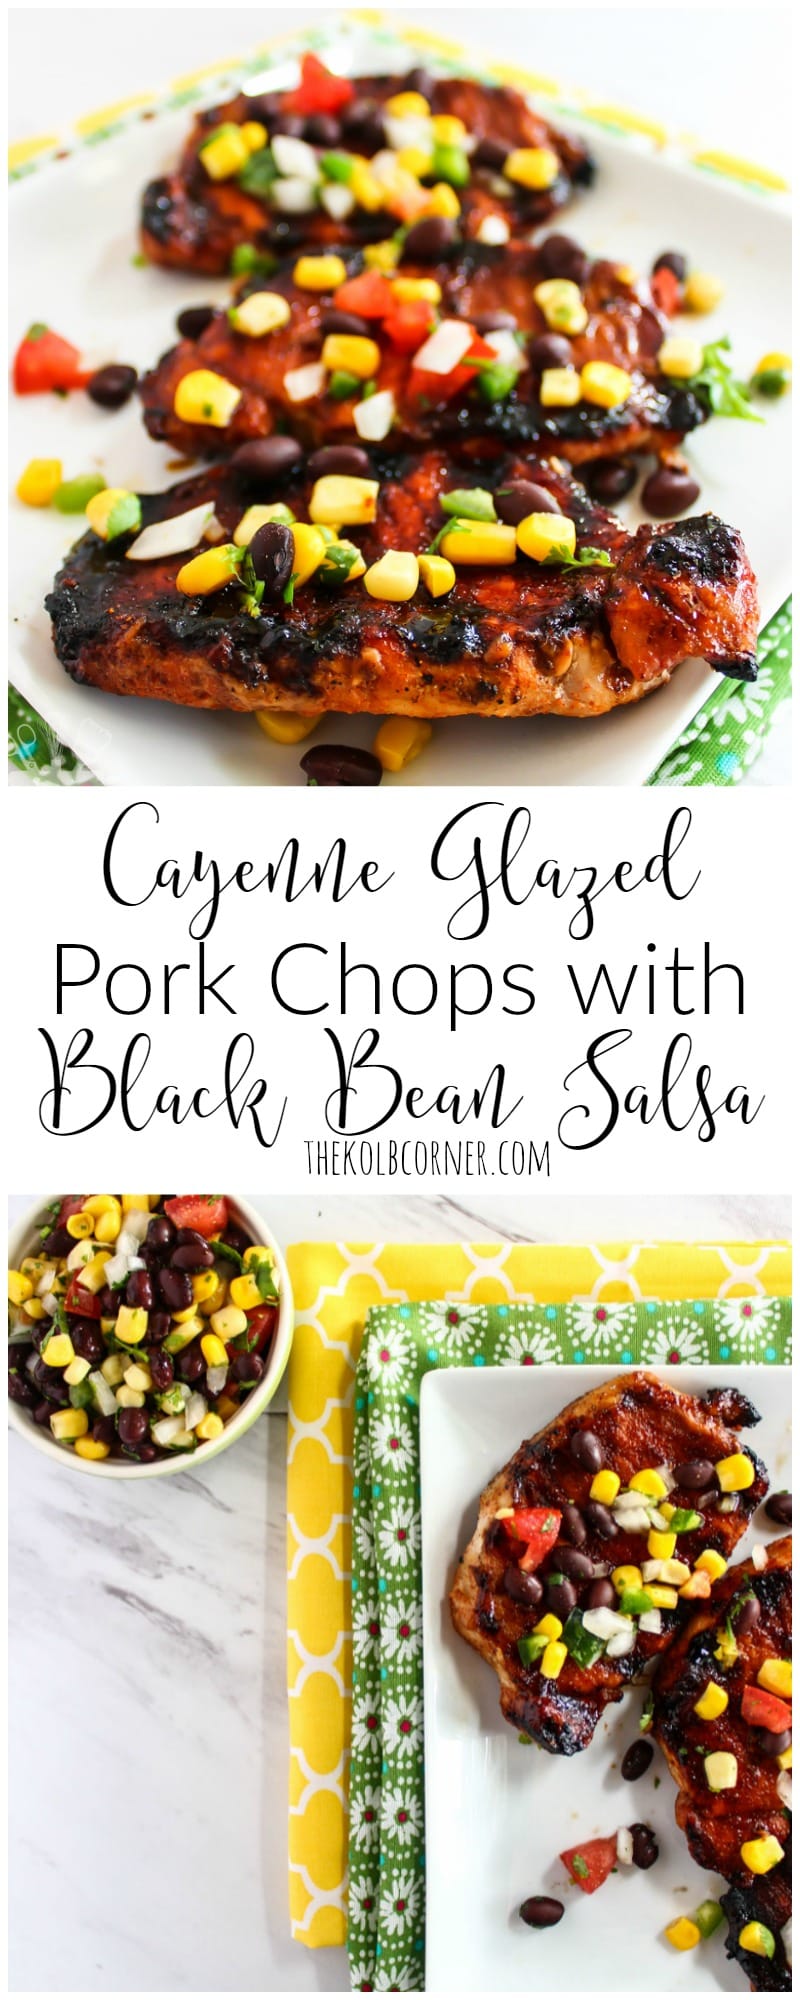 Cayenne Glazed Pork Chops with Black Bean Salsa